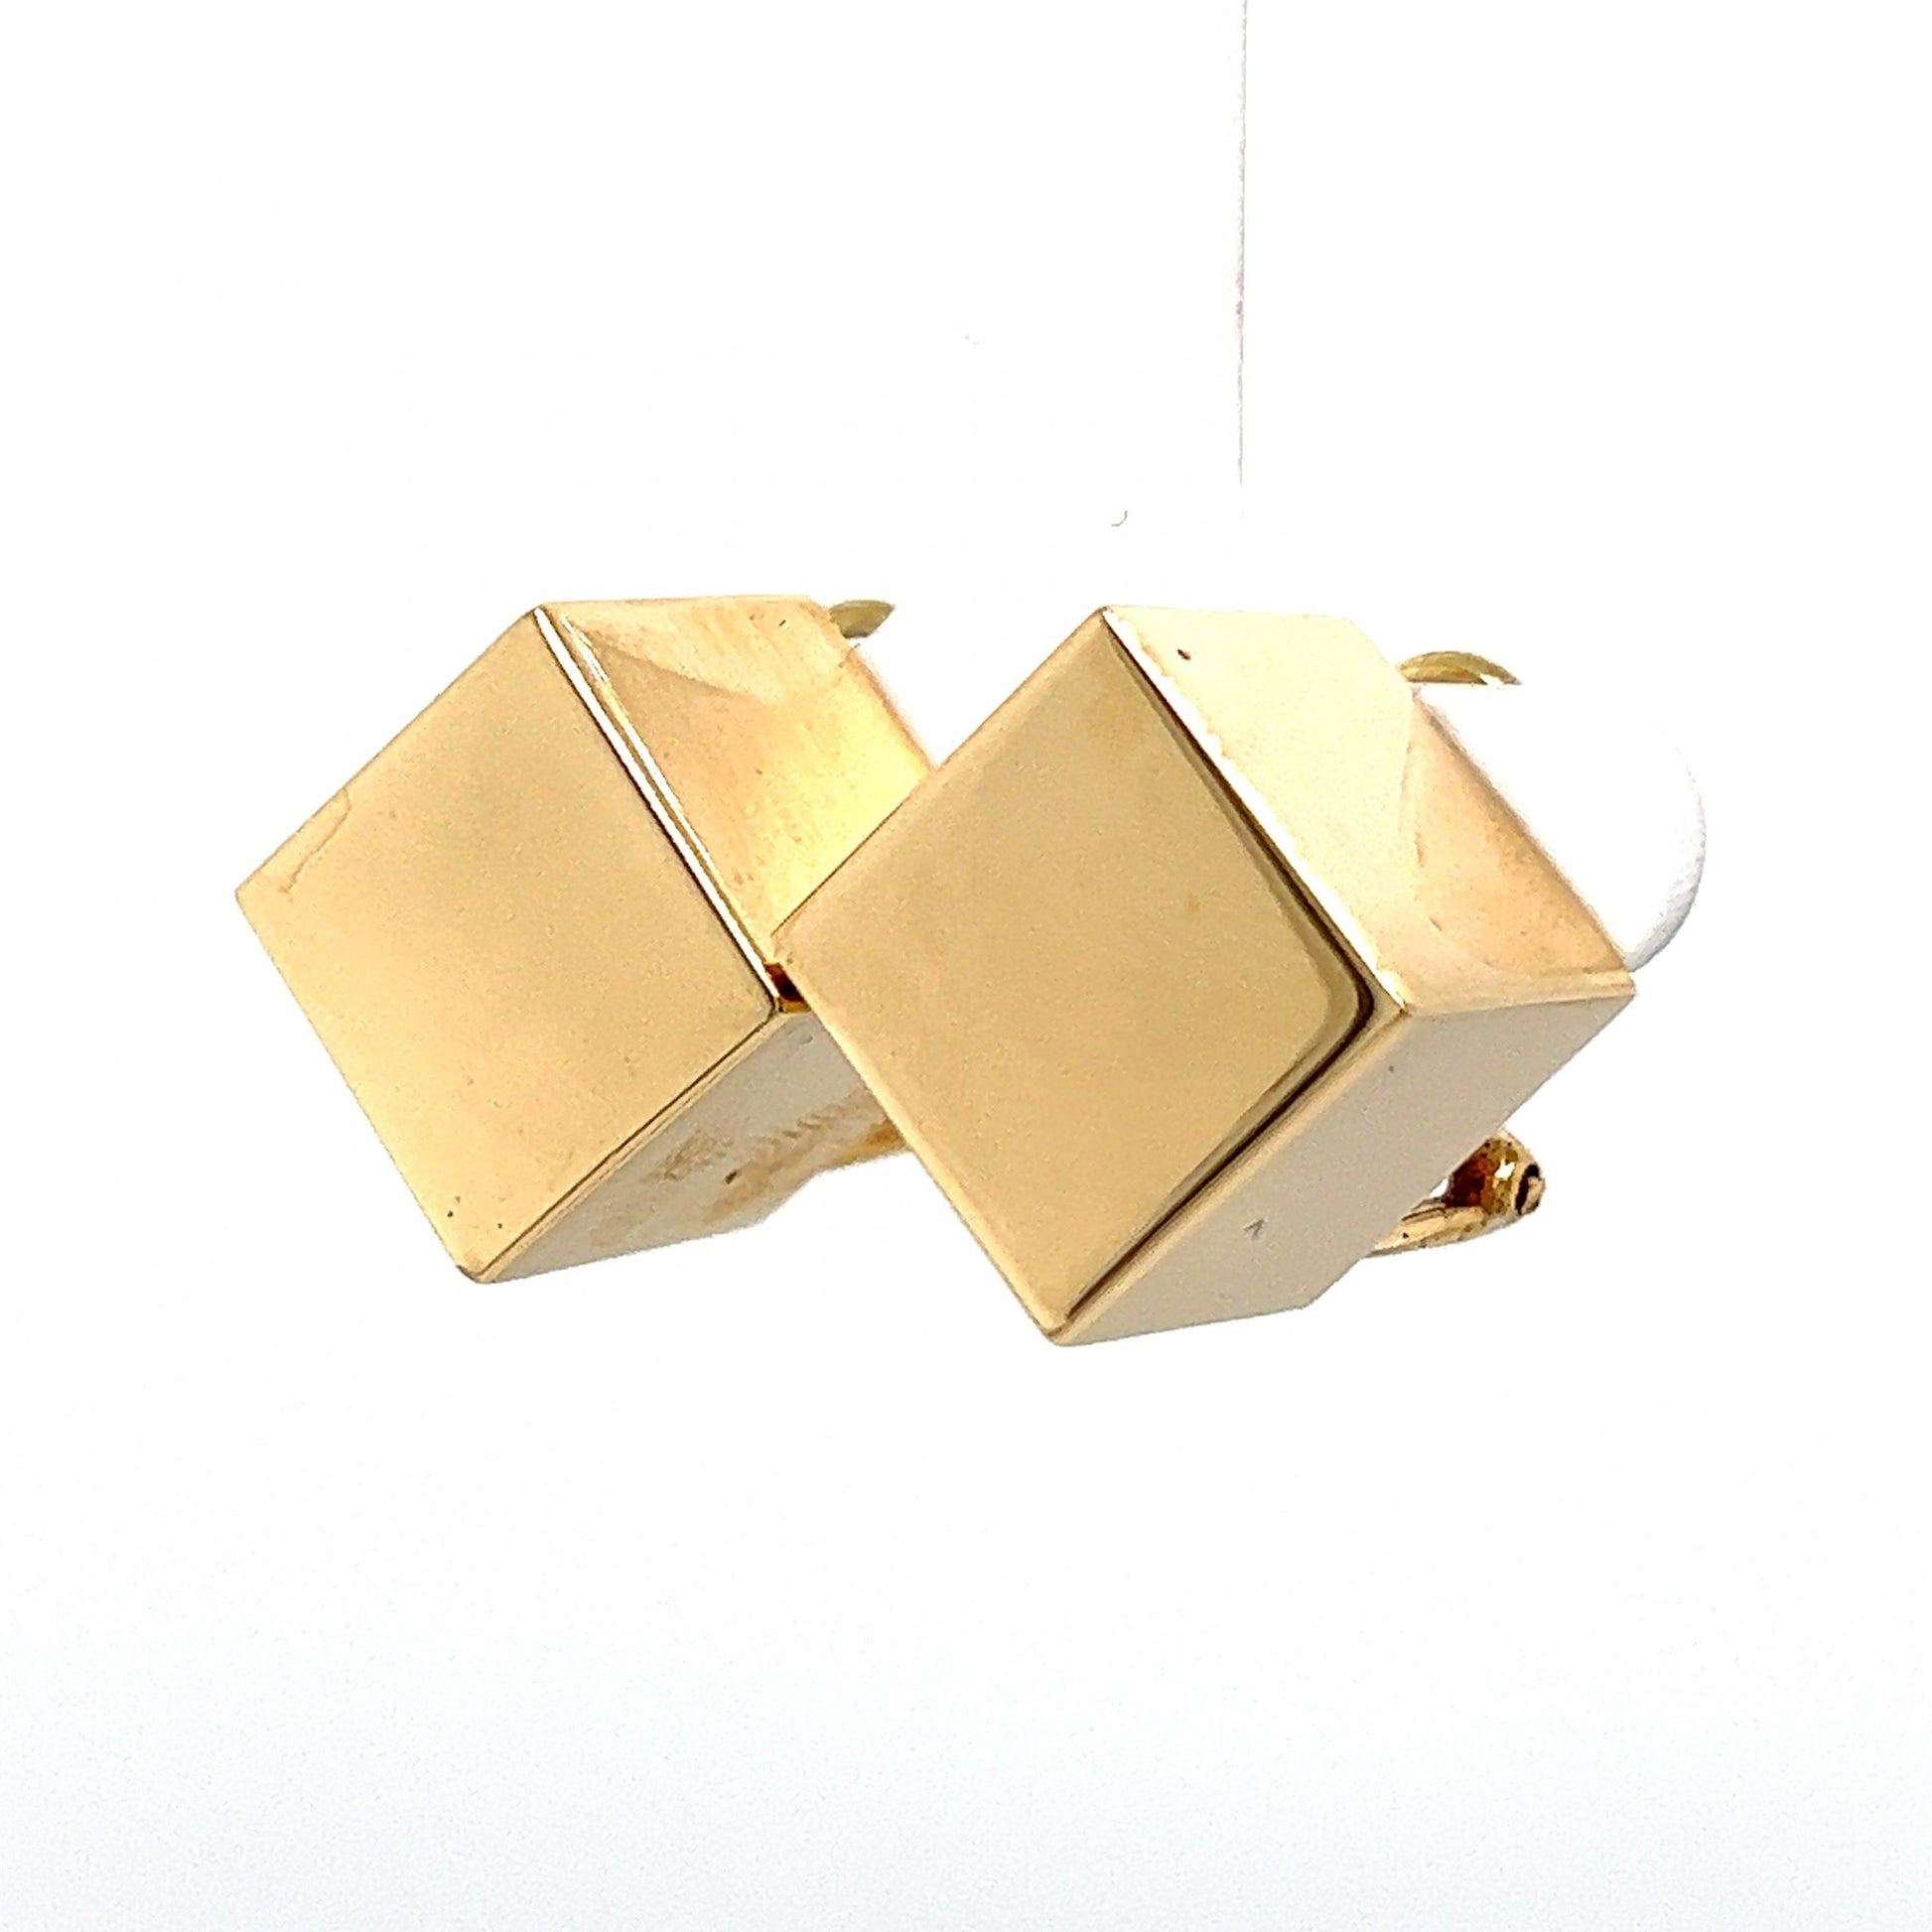 Cube Stud Earrings in 14k Yellow GoldComposition: 14 Karat Yellow Gold Total Gram Weight: 9.2 g Inscription: 14k
      